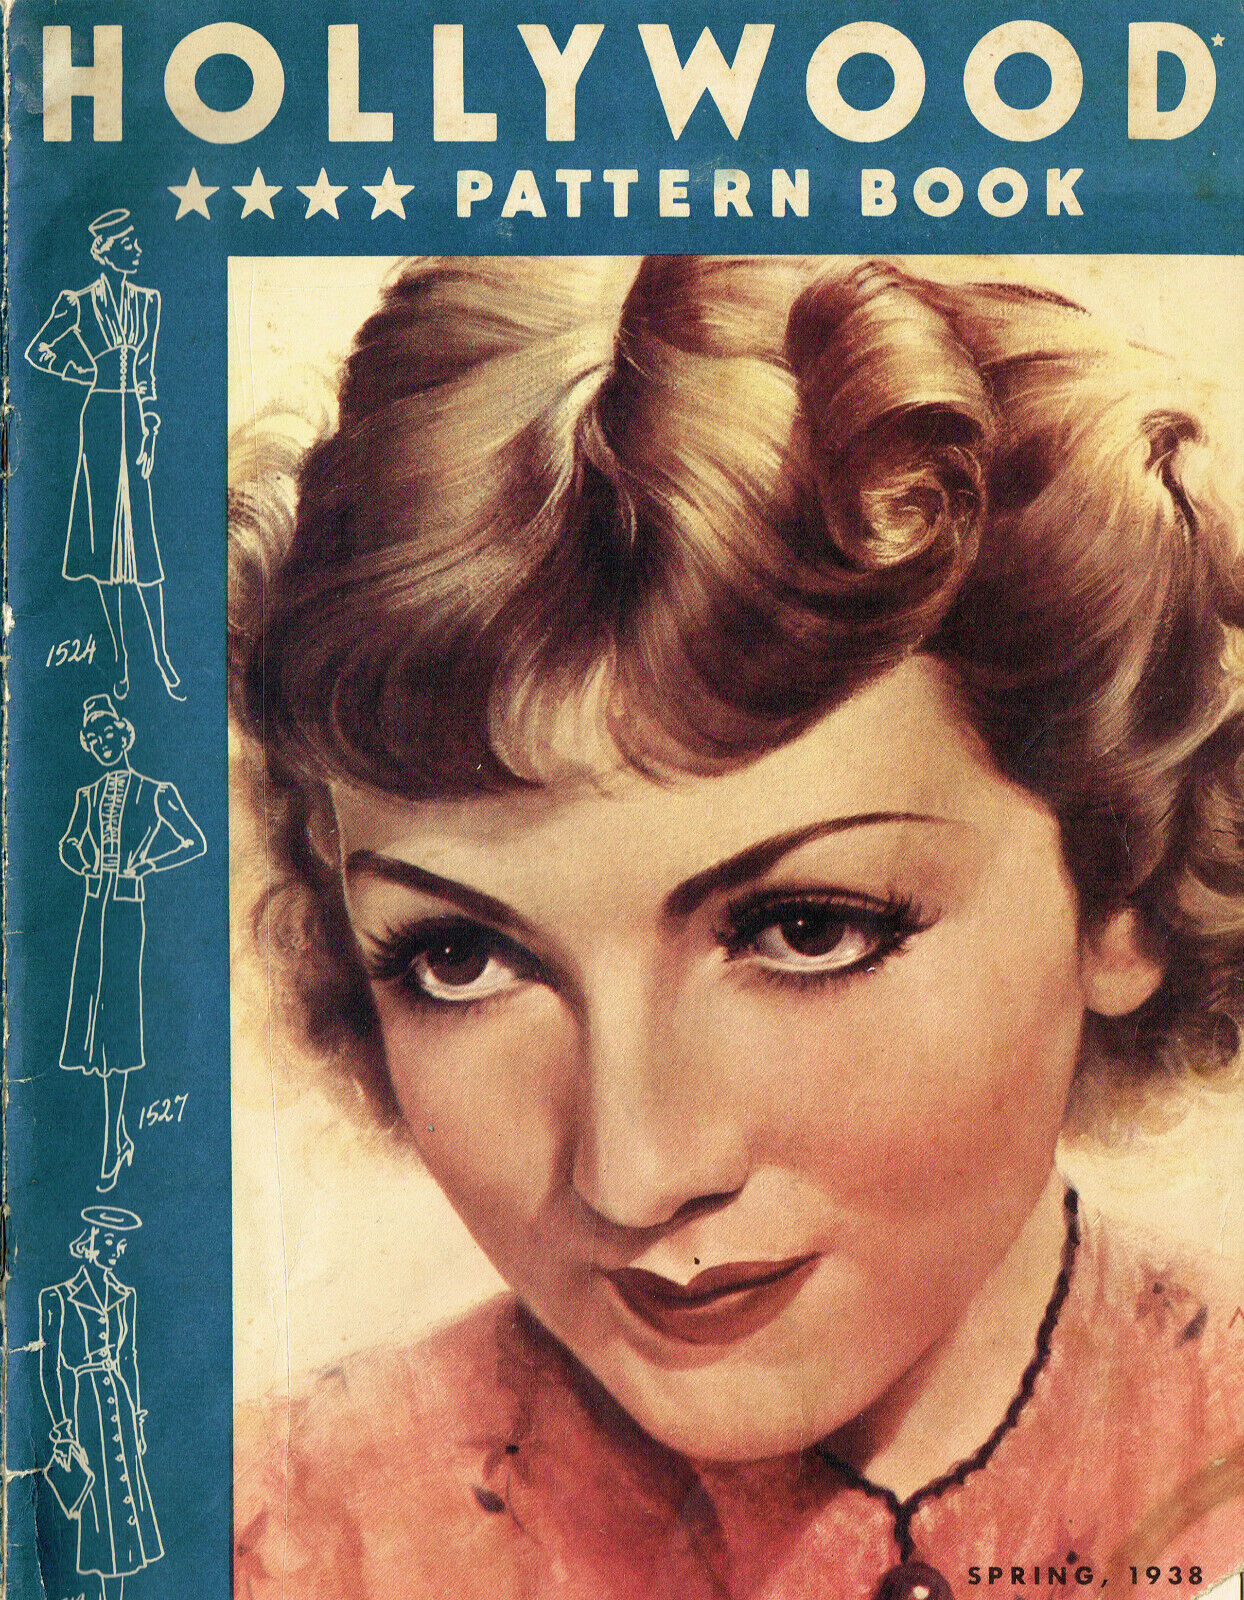 1930s Hollywood Spring 1938 Quarterly Pattern Book Magazine 48 pg Ebook on CD